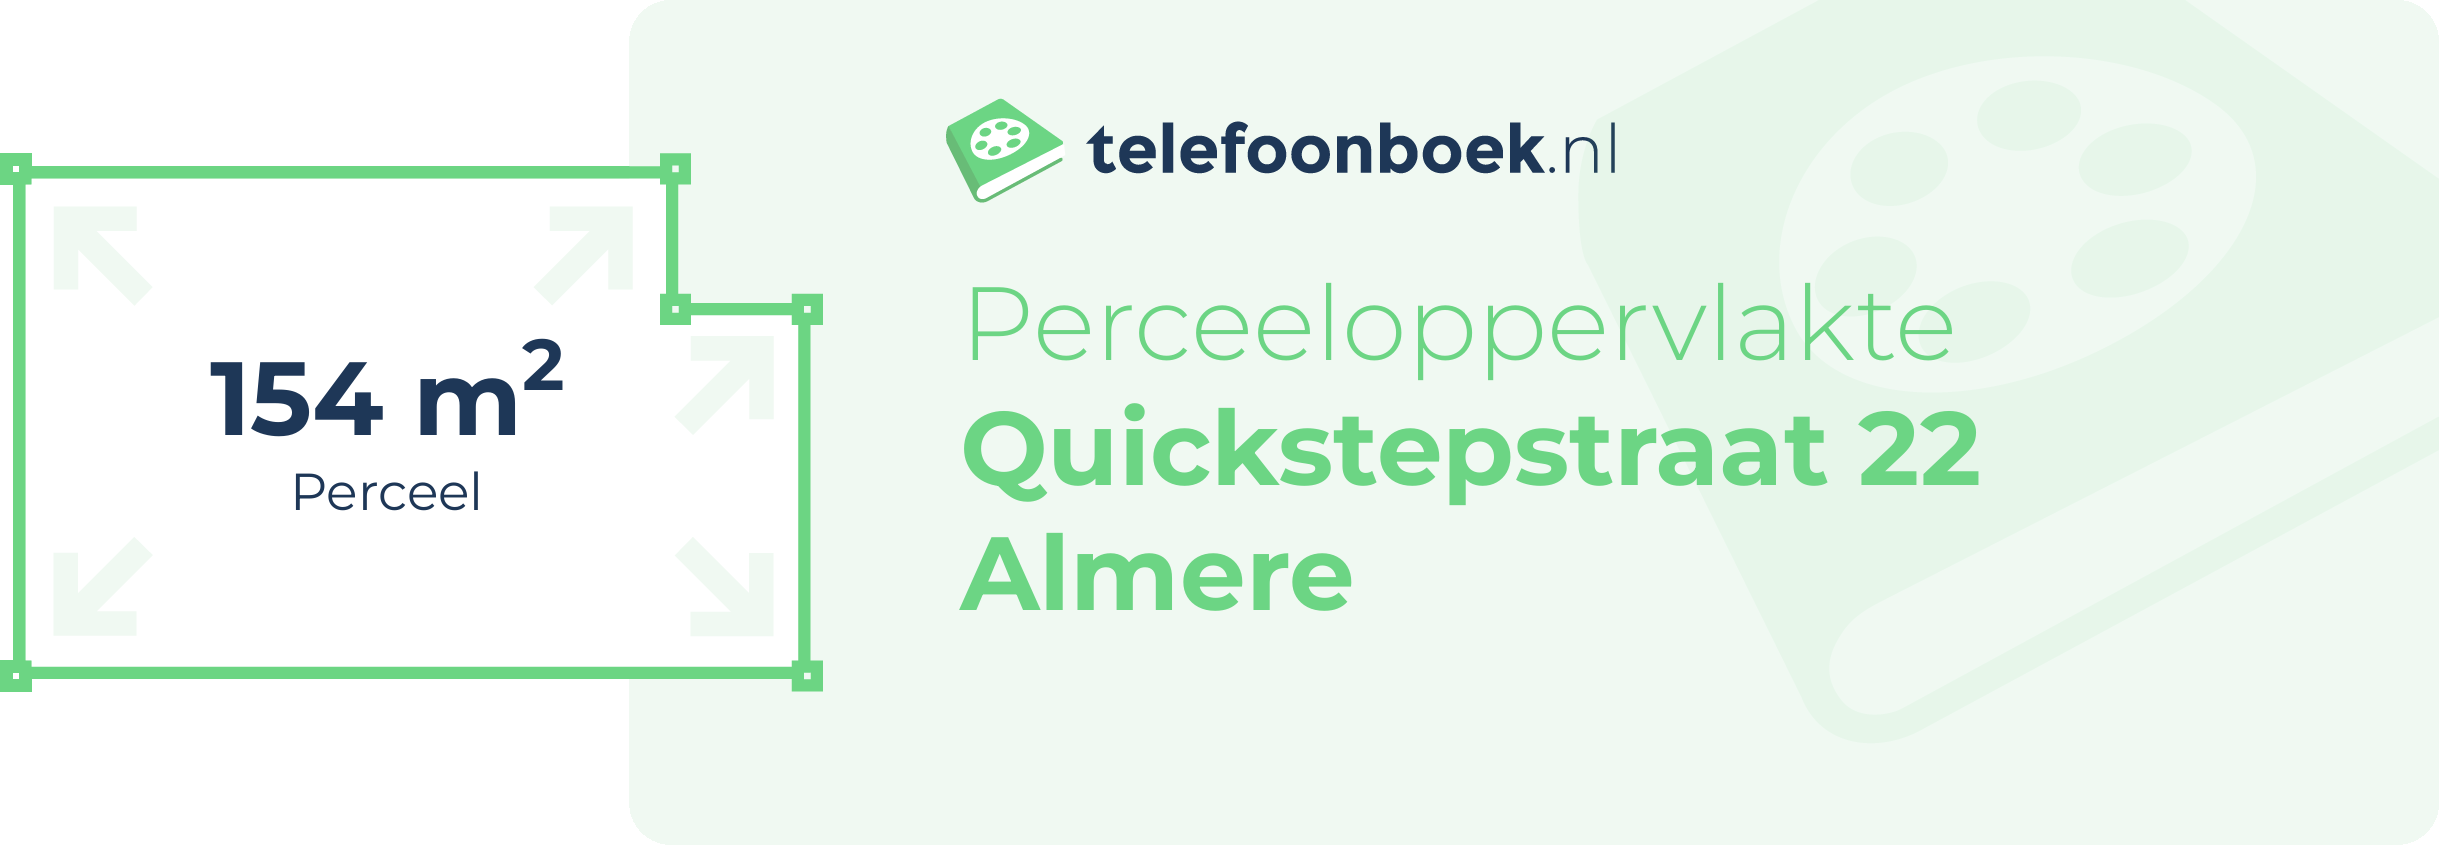 Perceeloppervlakte Quickstepstraat 22 Almere